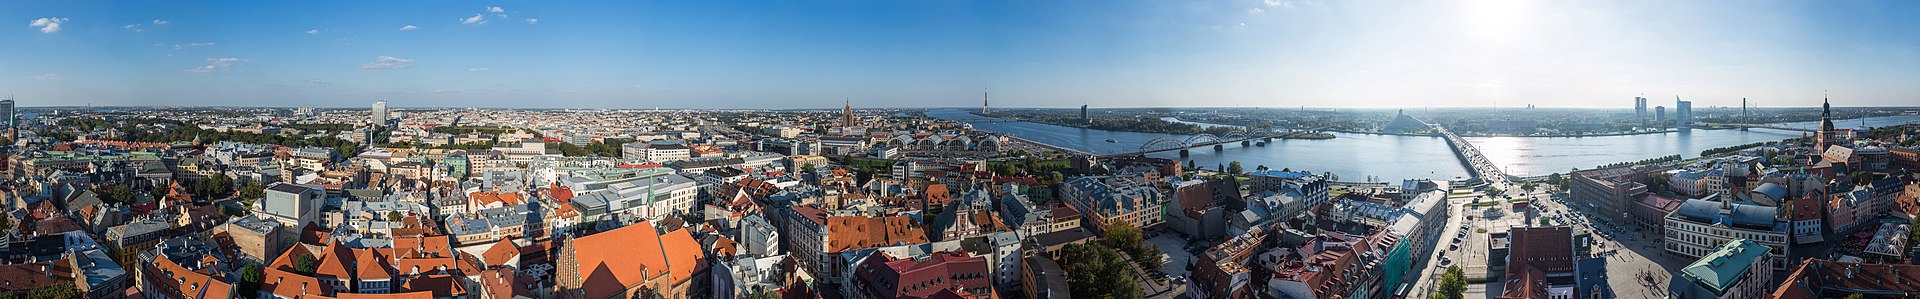 1920px-Riga_Skyline_Panorama%2C_Latvia_-_Diliff.jpg